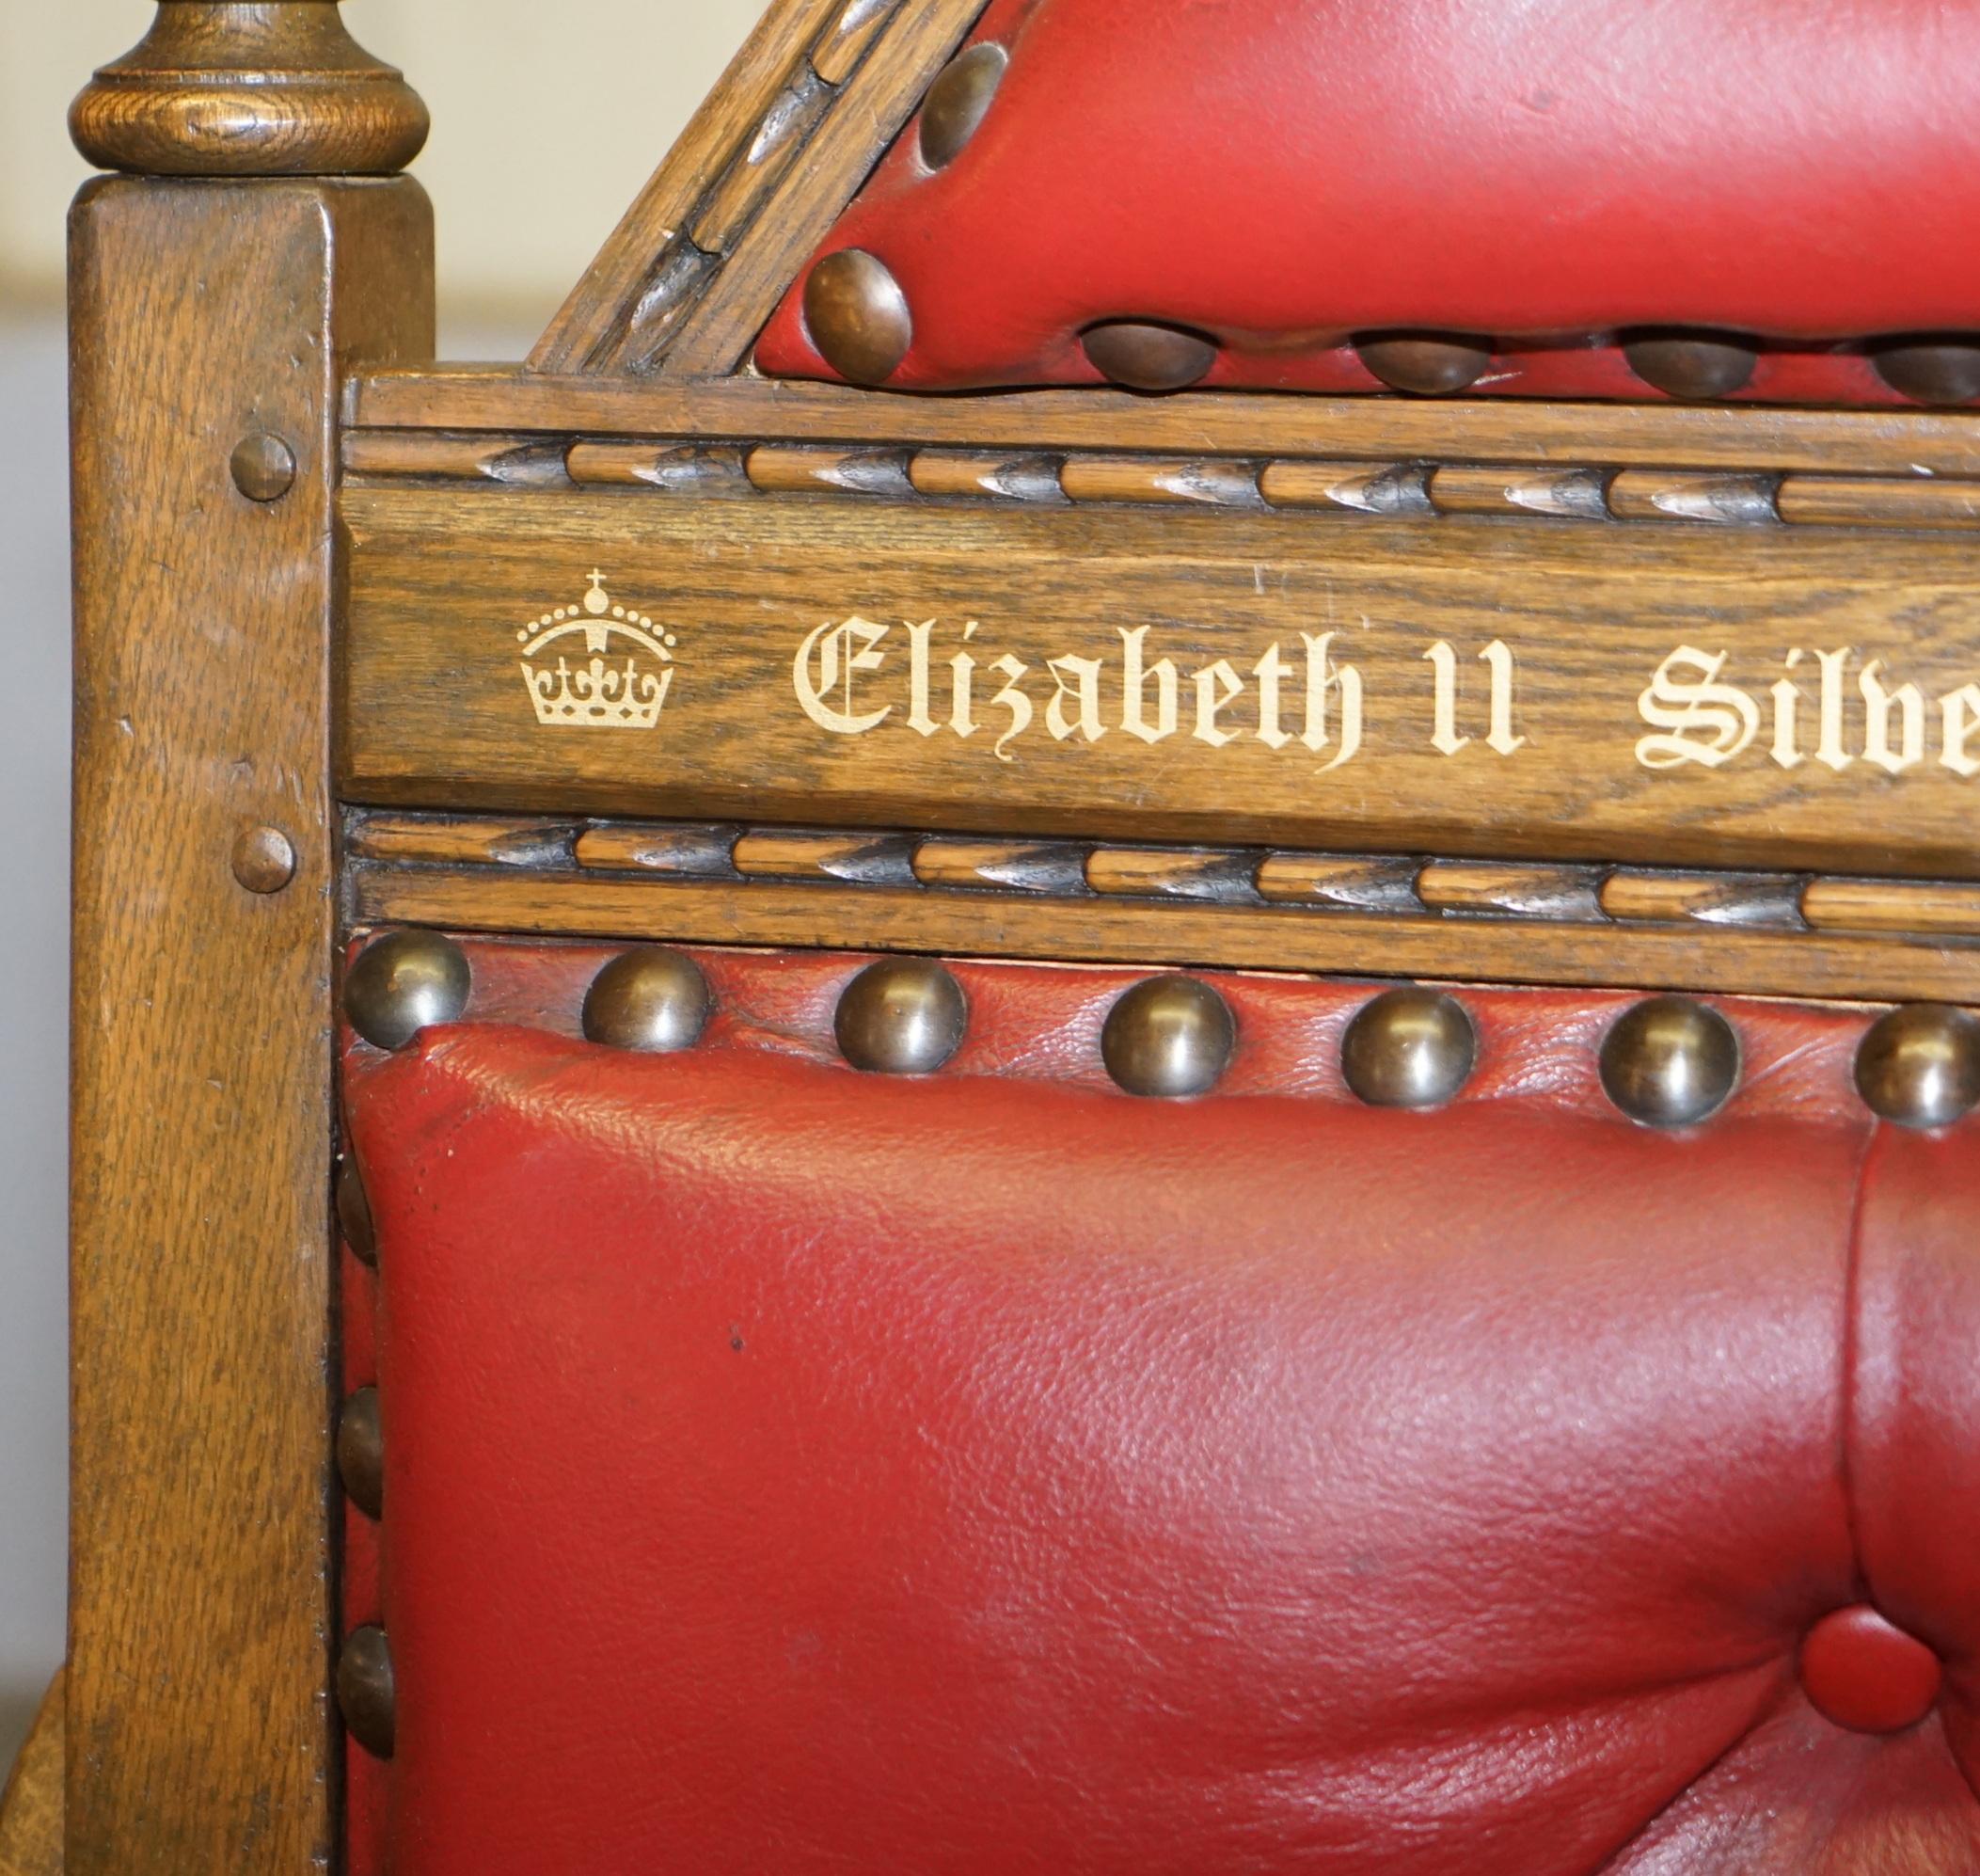 Mid-Century Modern Original Elizabeth II Silver Jubilee Throne Armchair English Oxblood Oak Leather